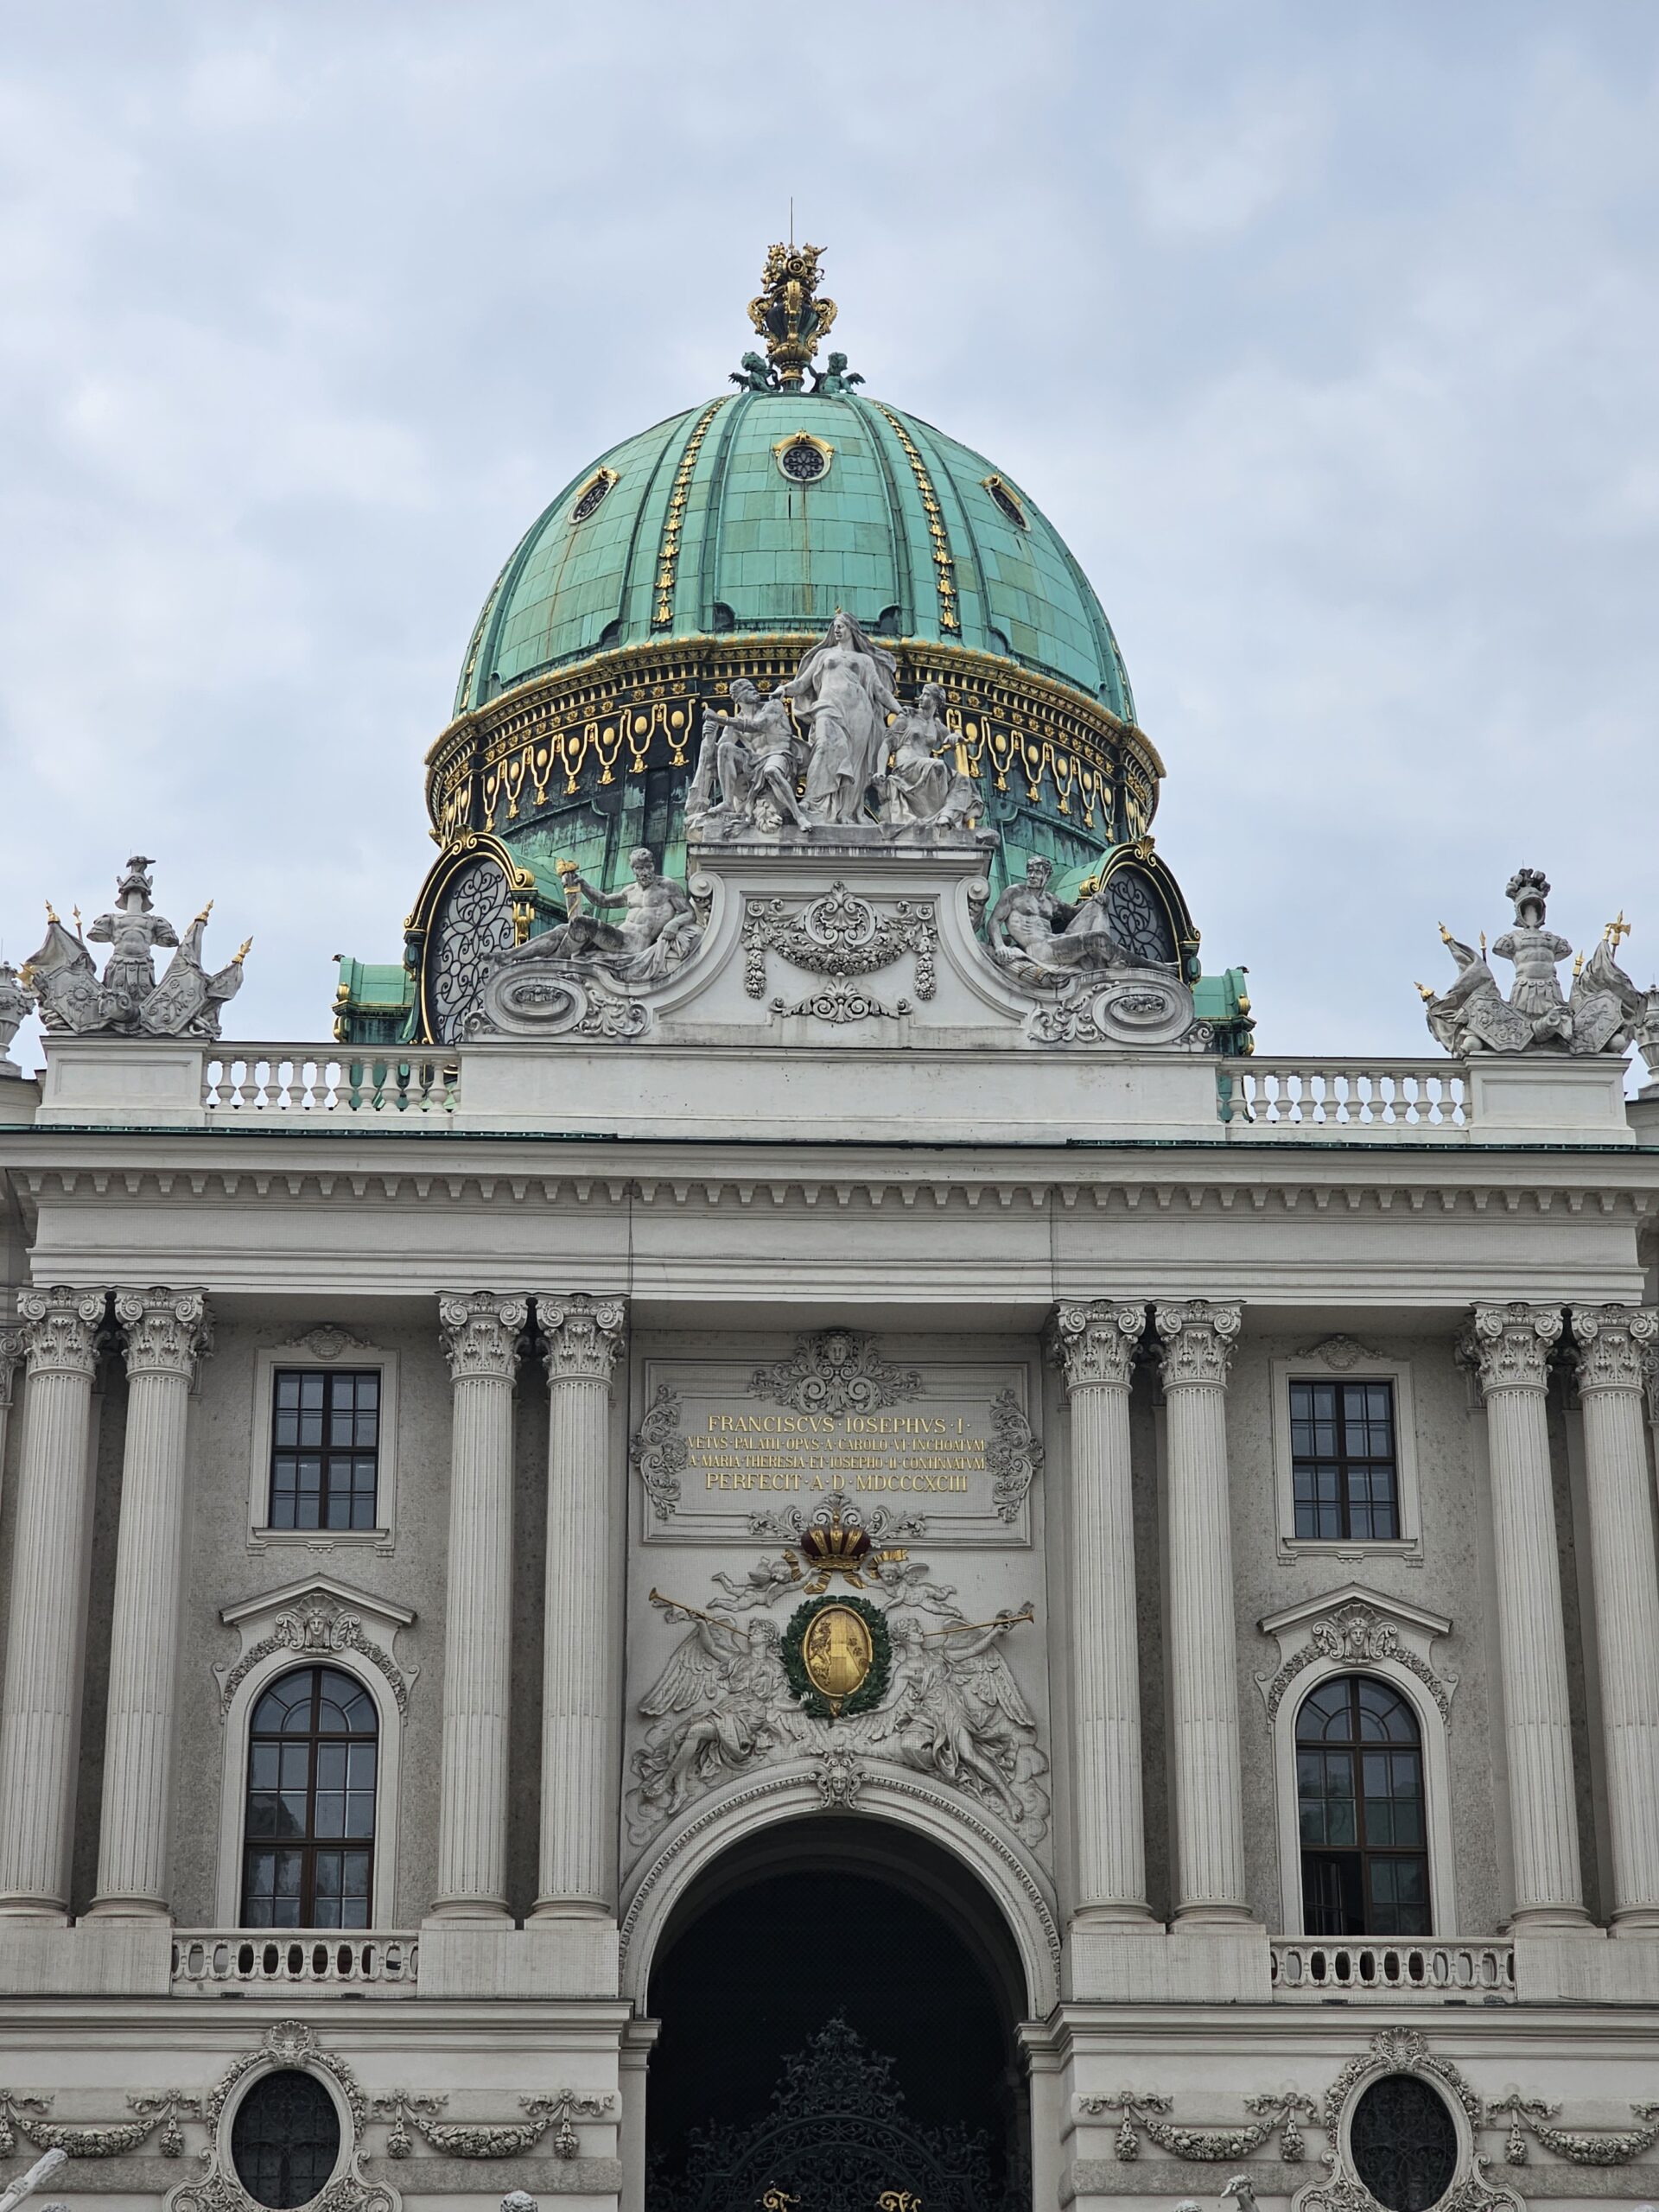 St, Michael Entrance, Hofburg Vienna, entrance. Image: 360onhistory.com